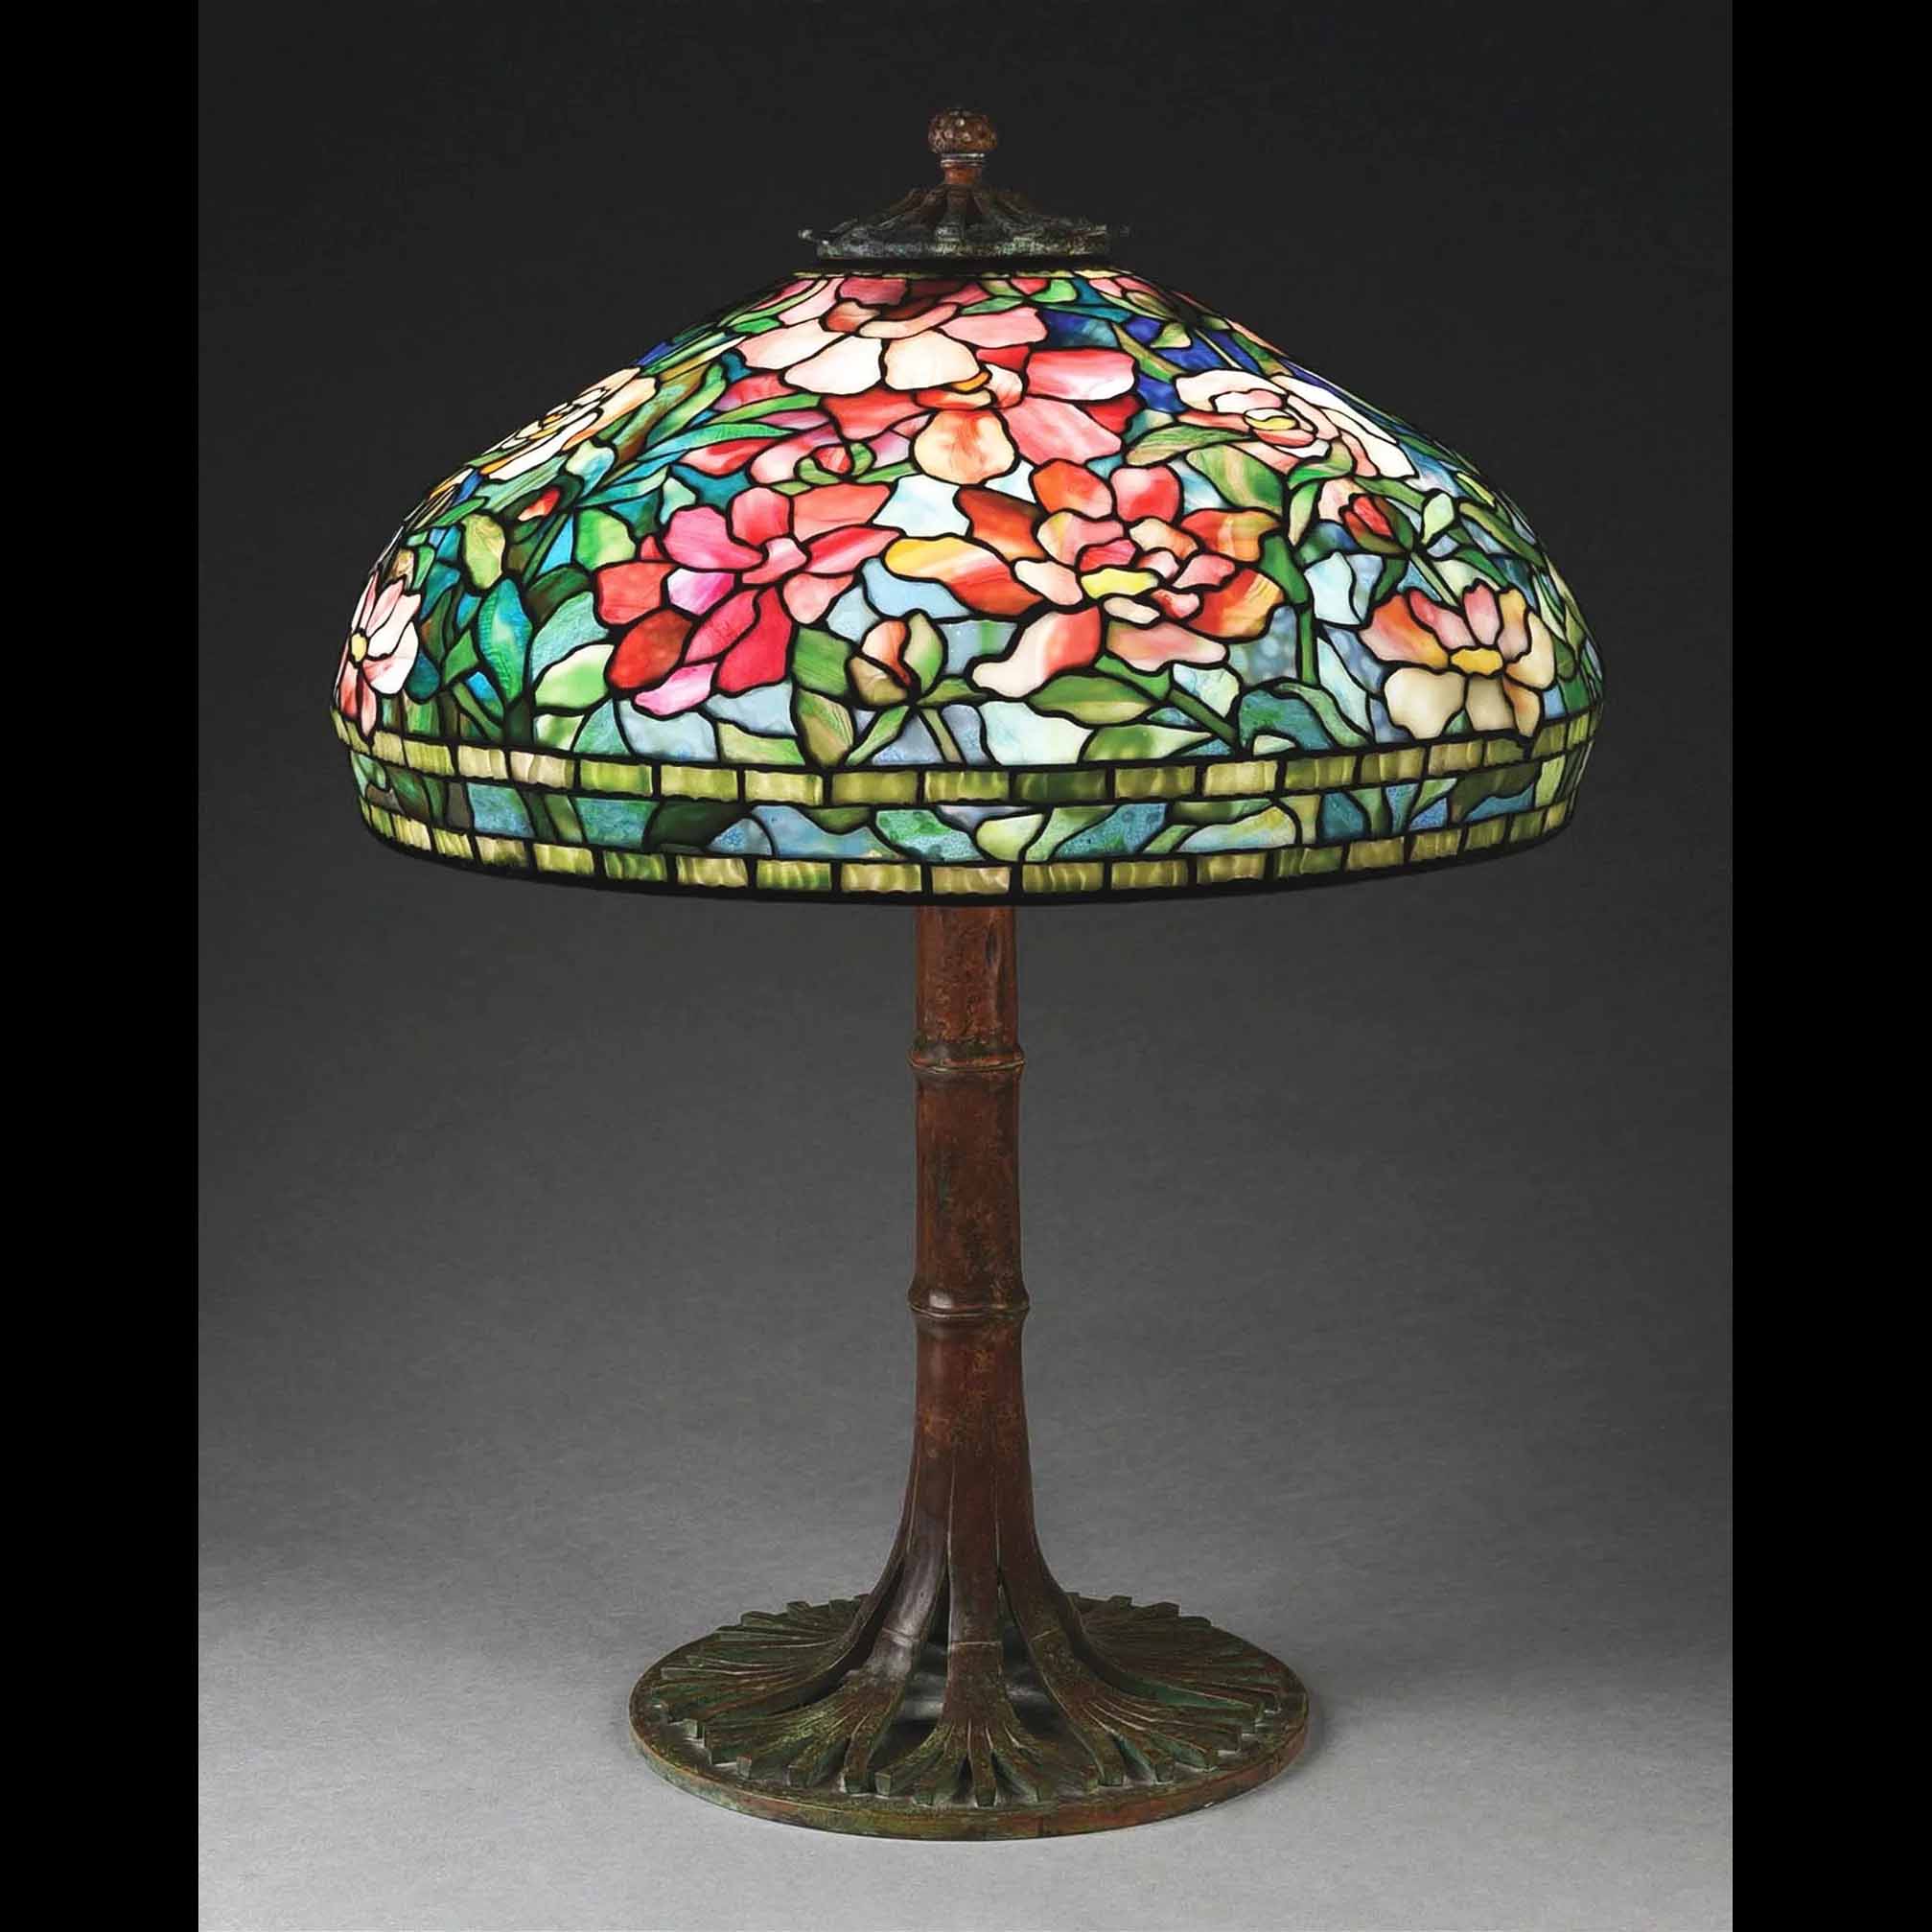 Tiffany Studios Peony table lamp, estimated at $100,000-$150,000 at Morphy.